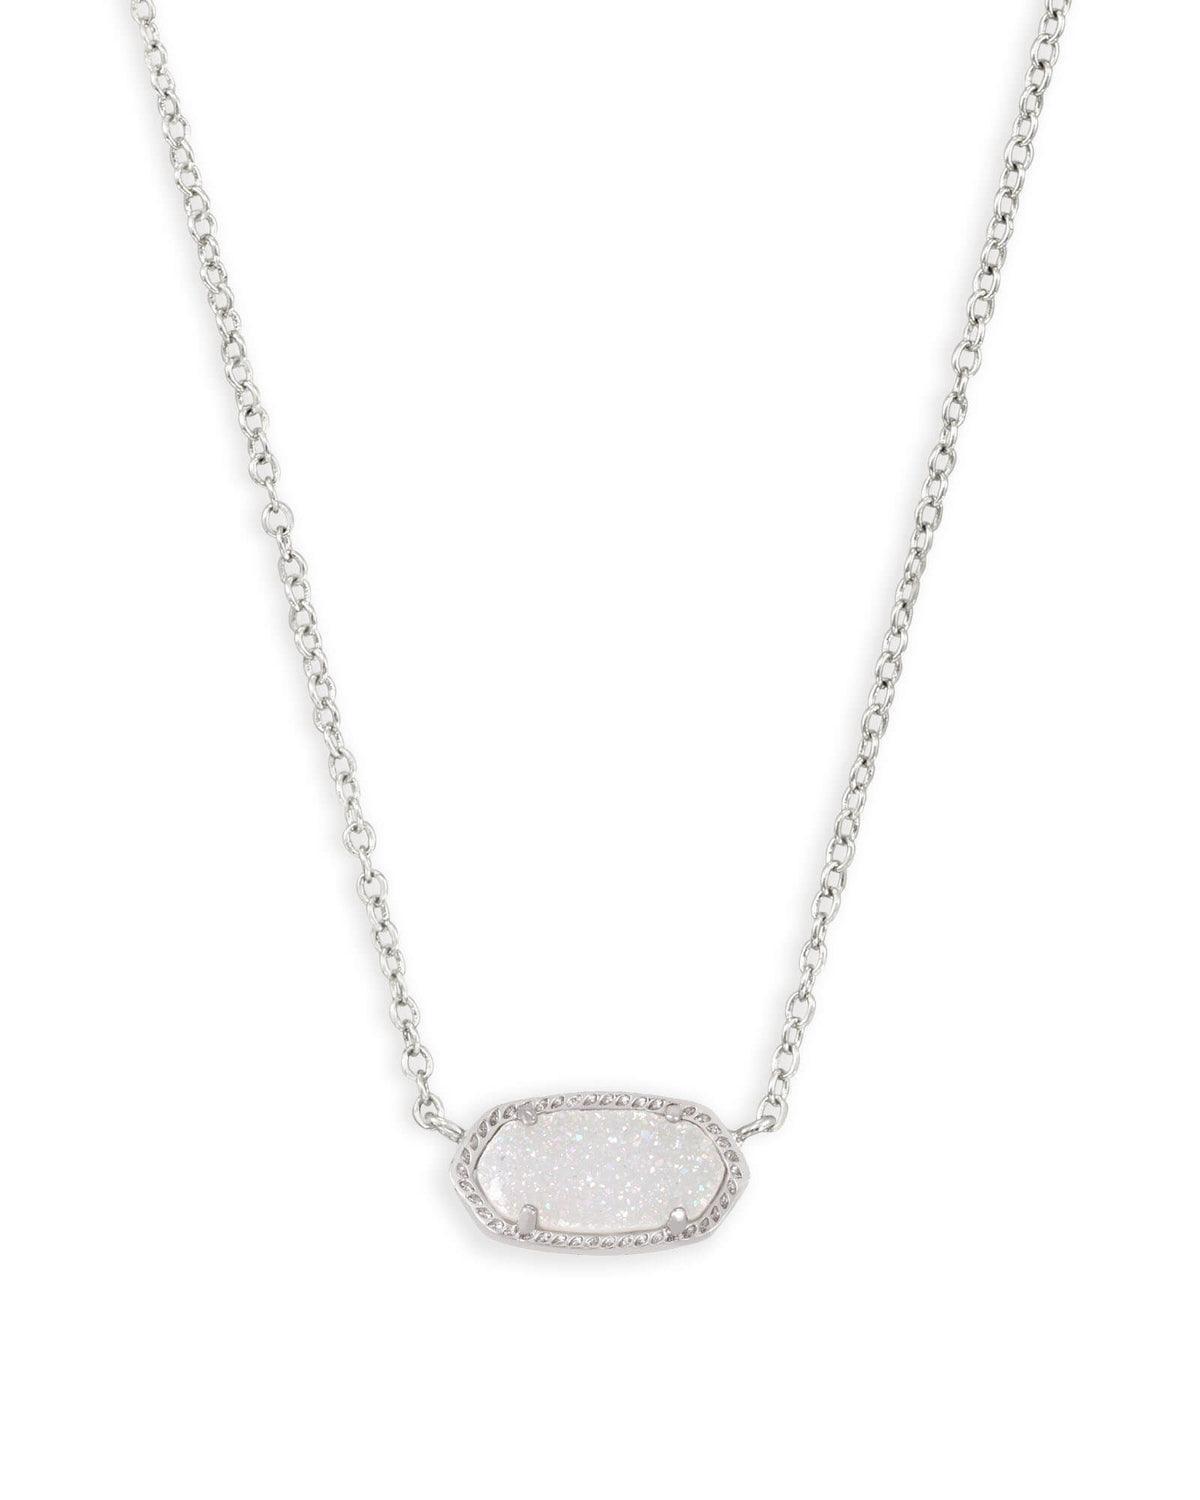 Kendra Scott Elisa Silver Pendant Necklace in Iridescent Drusy